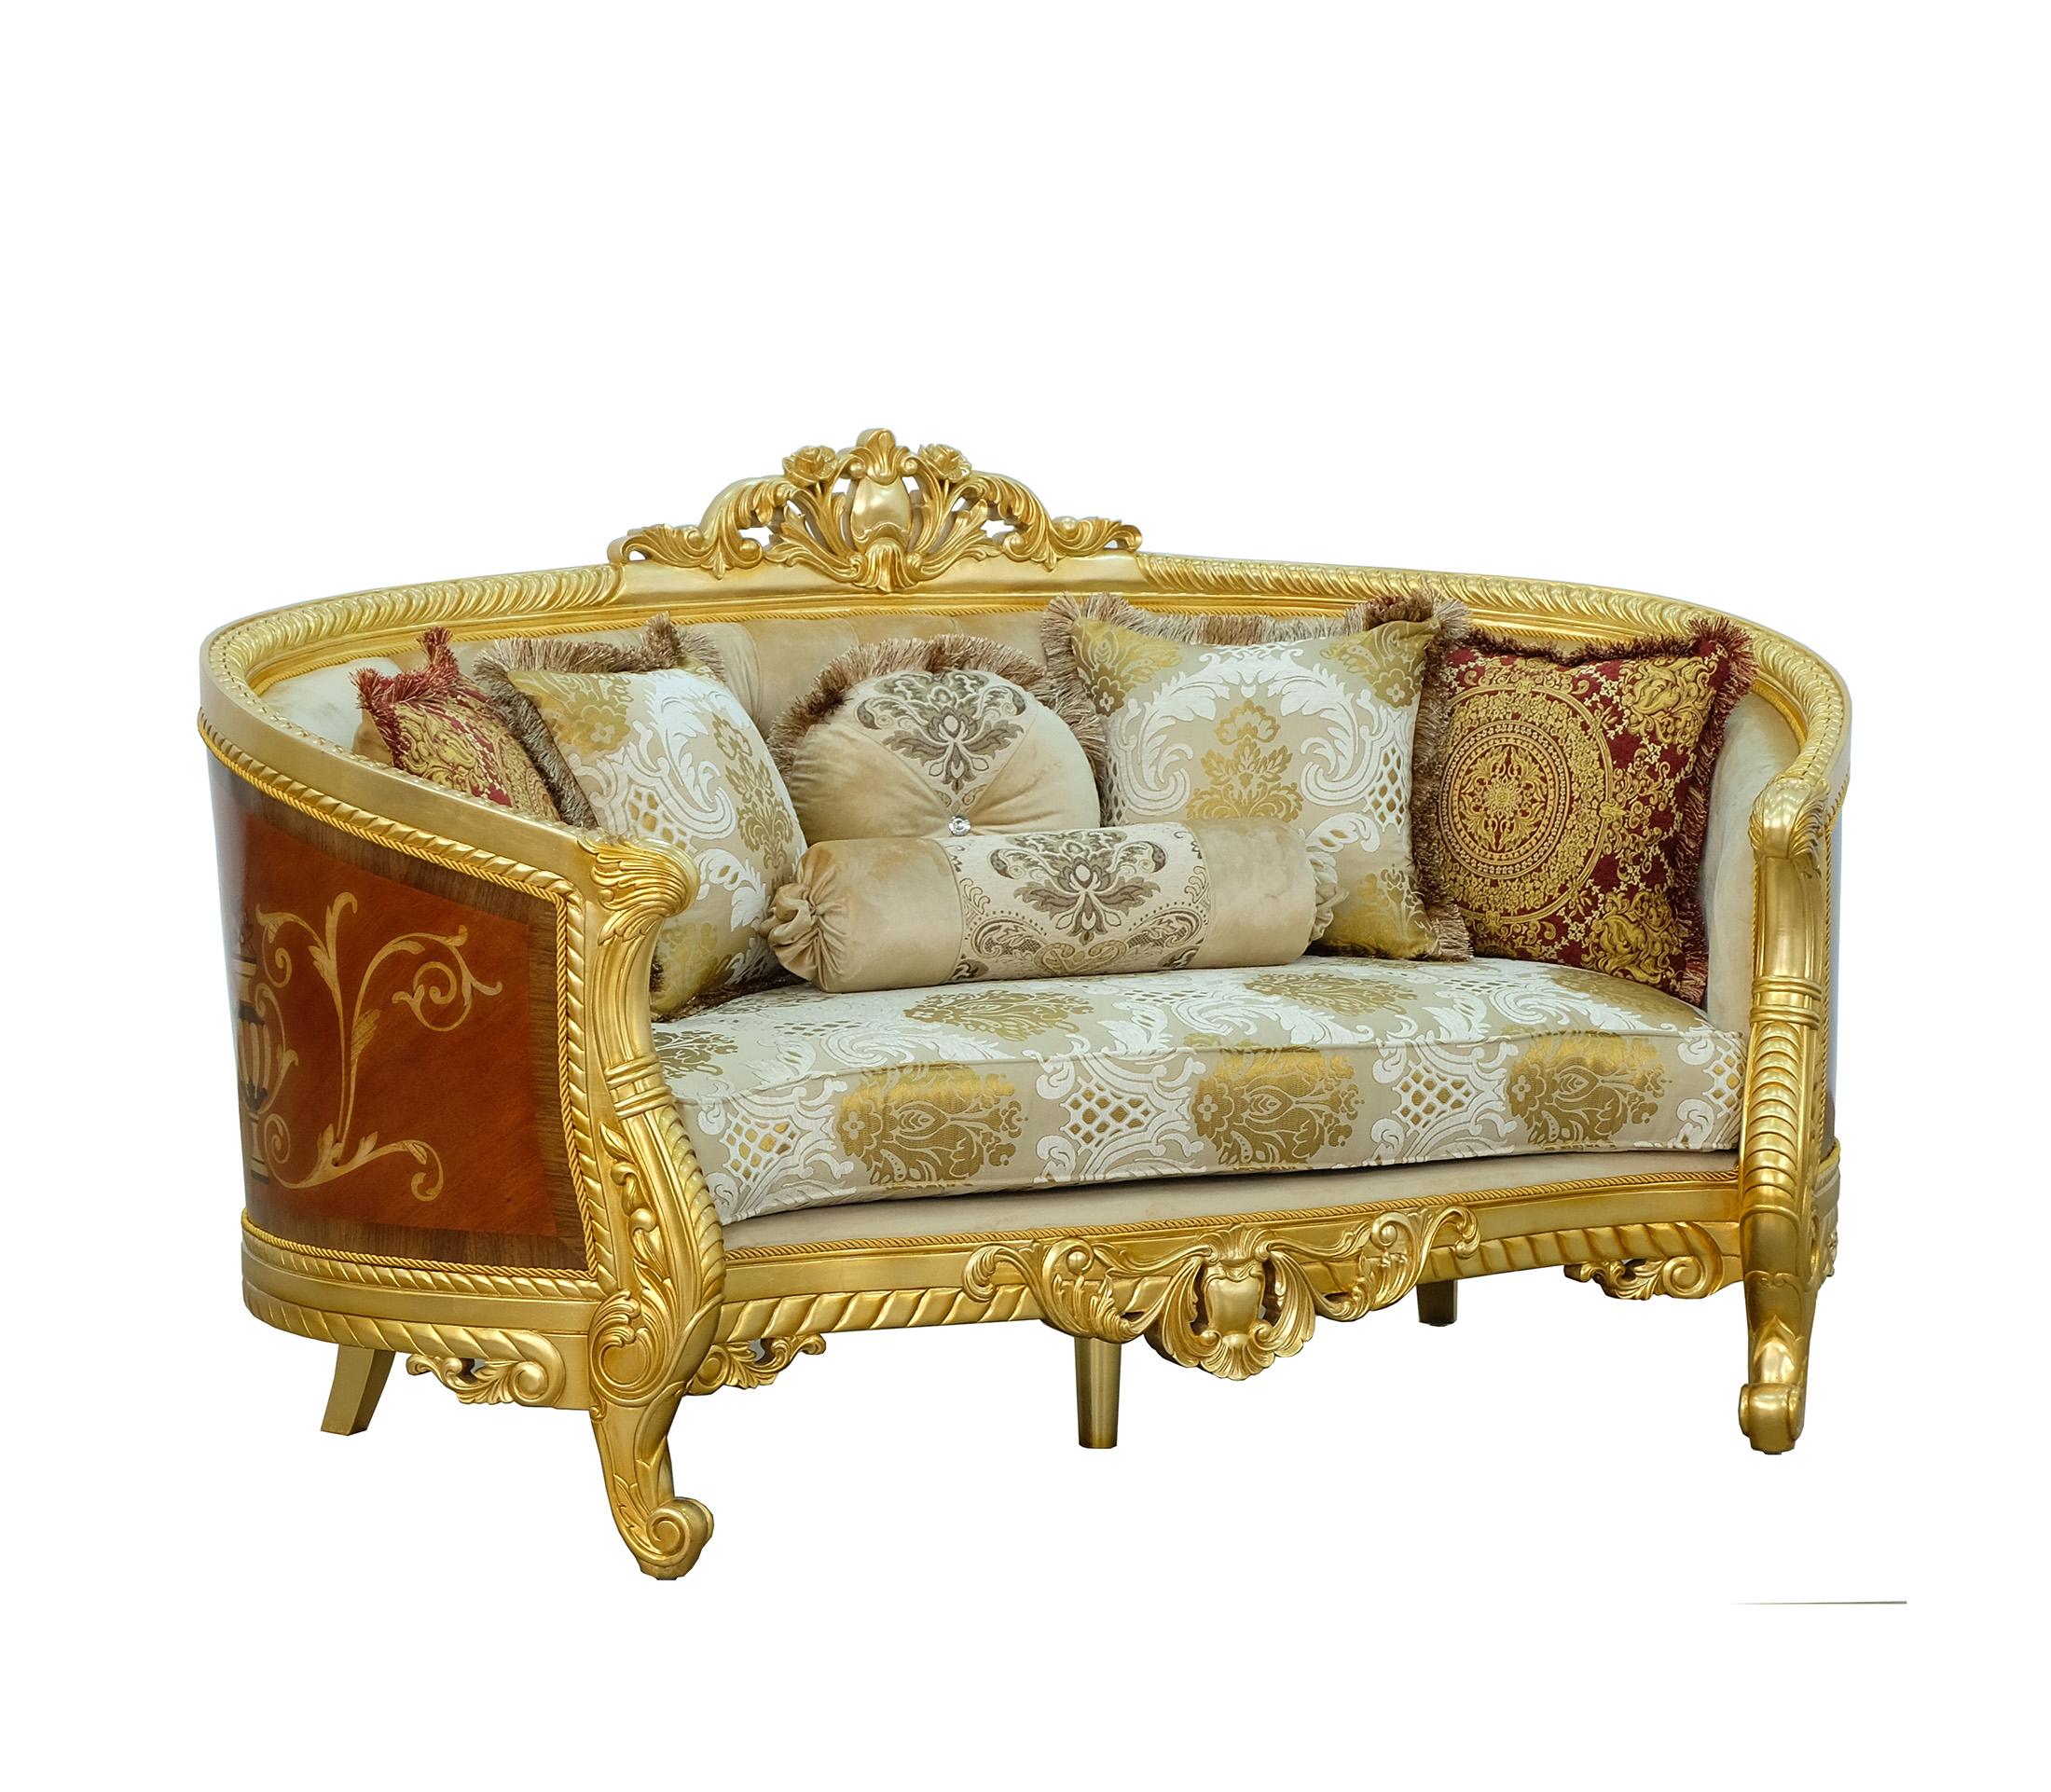 Classic, Traditional Loveseat LUXOR 68584-L in Ebony, Antique, Mahogany, Gold, Beige Fabric